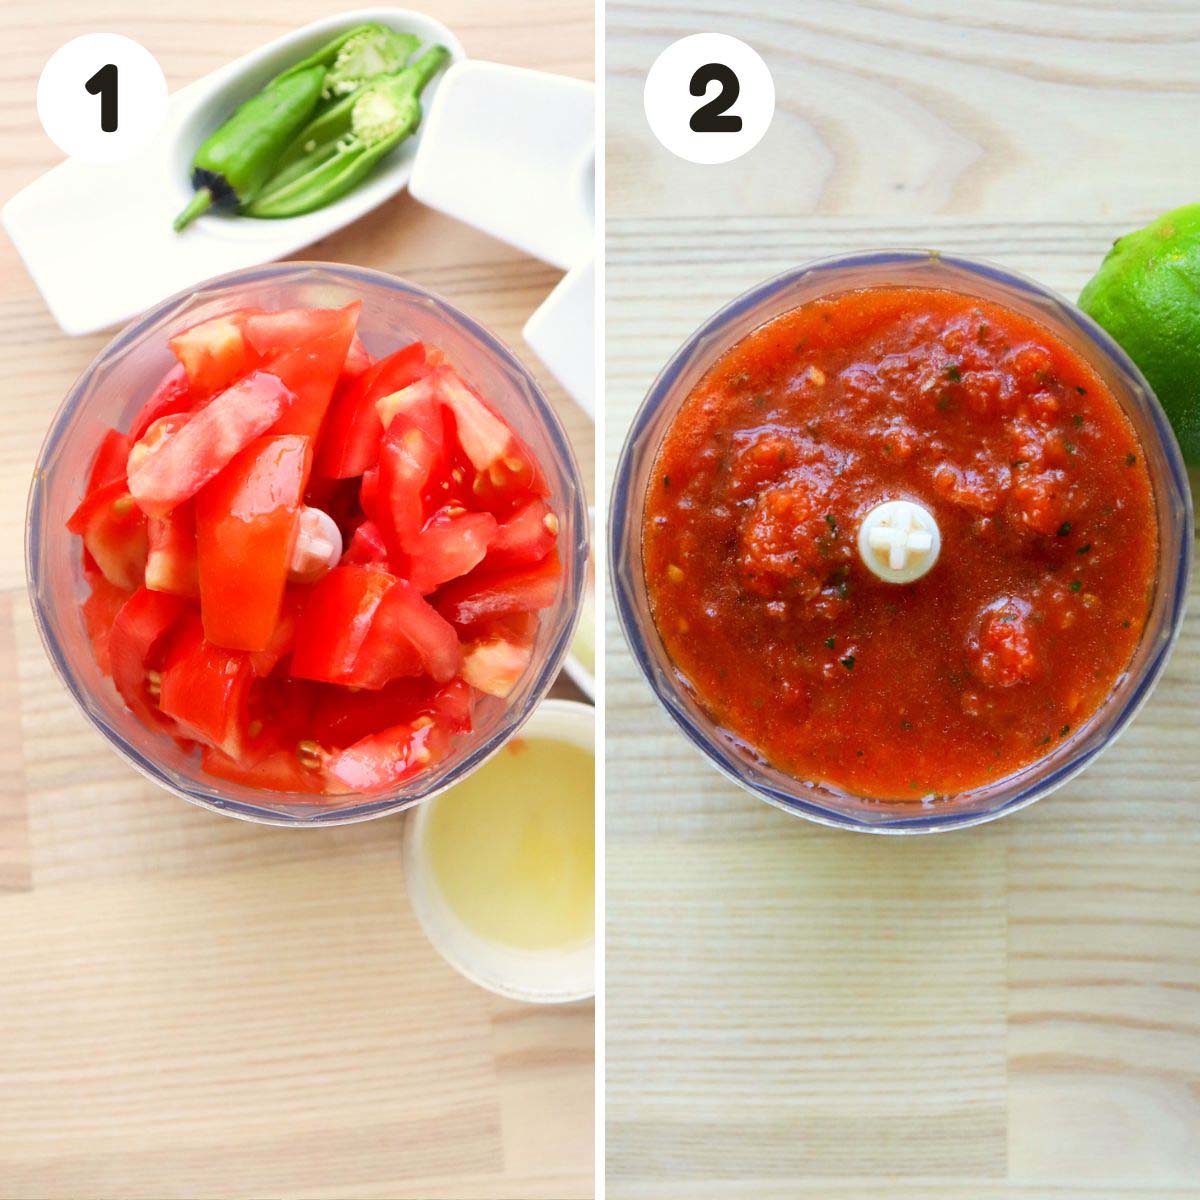 Steps to make the blender salsa.